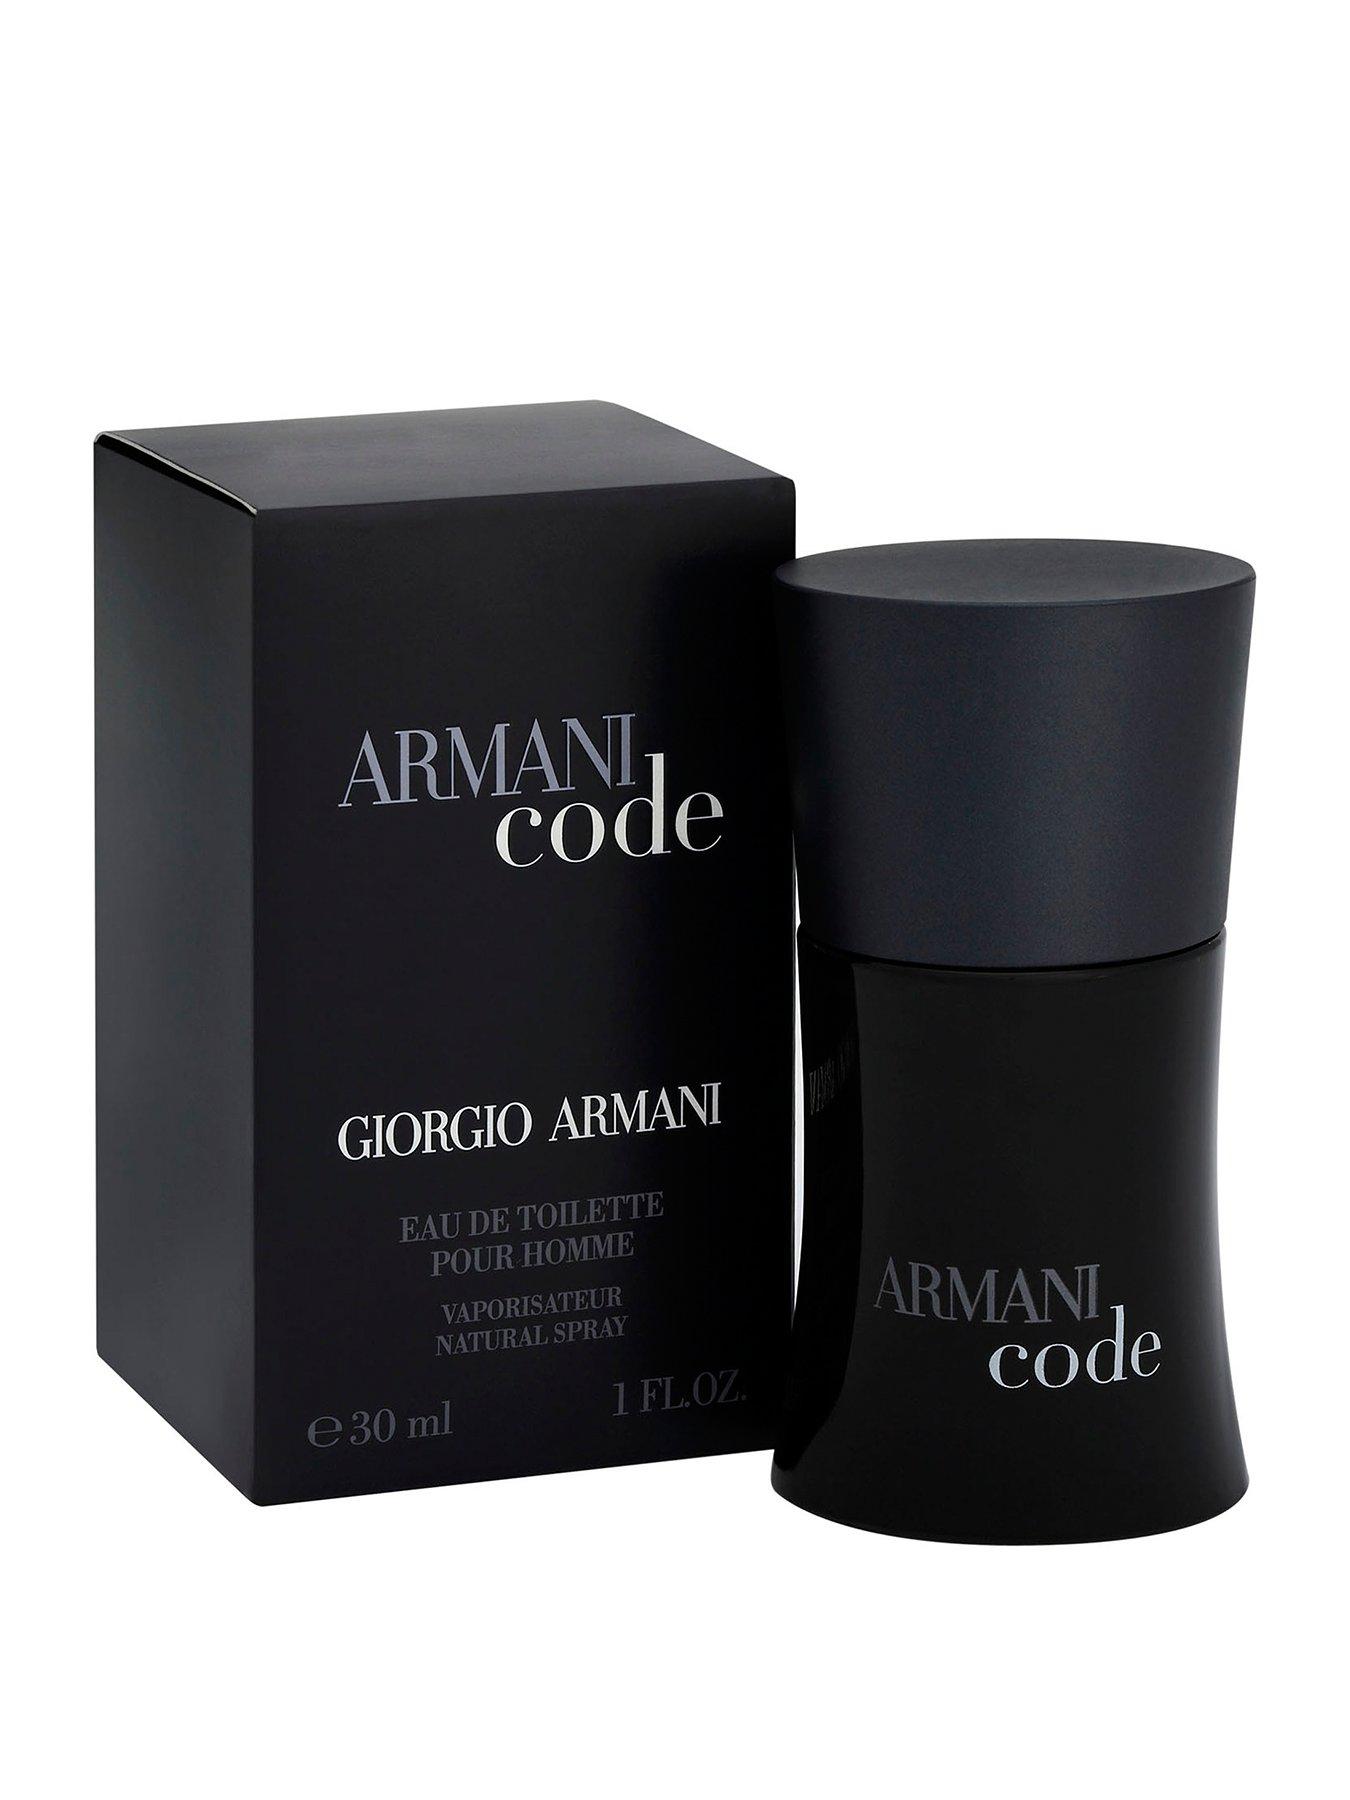 armani code 30ml duo - 60% OFF - awi.com